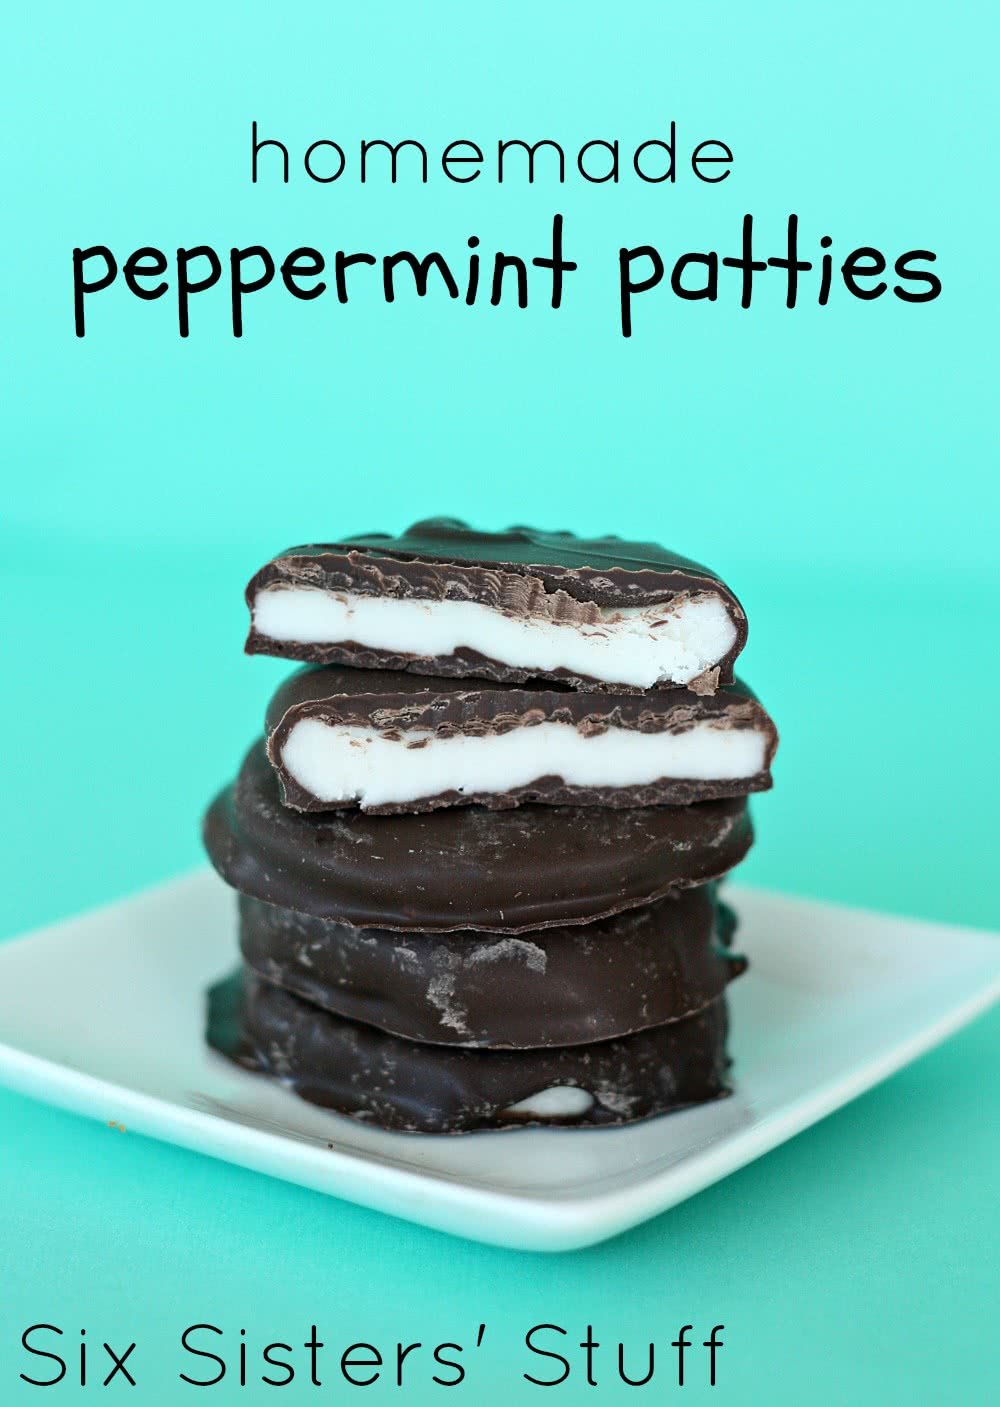 Homemade Peppermint Patties Recipe